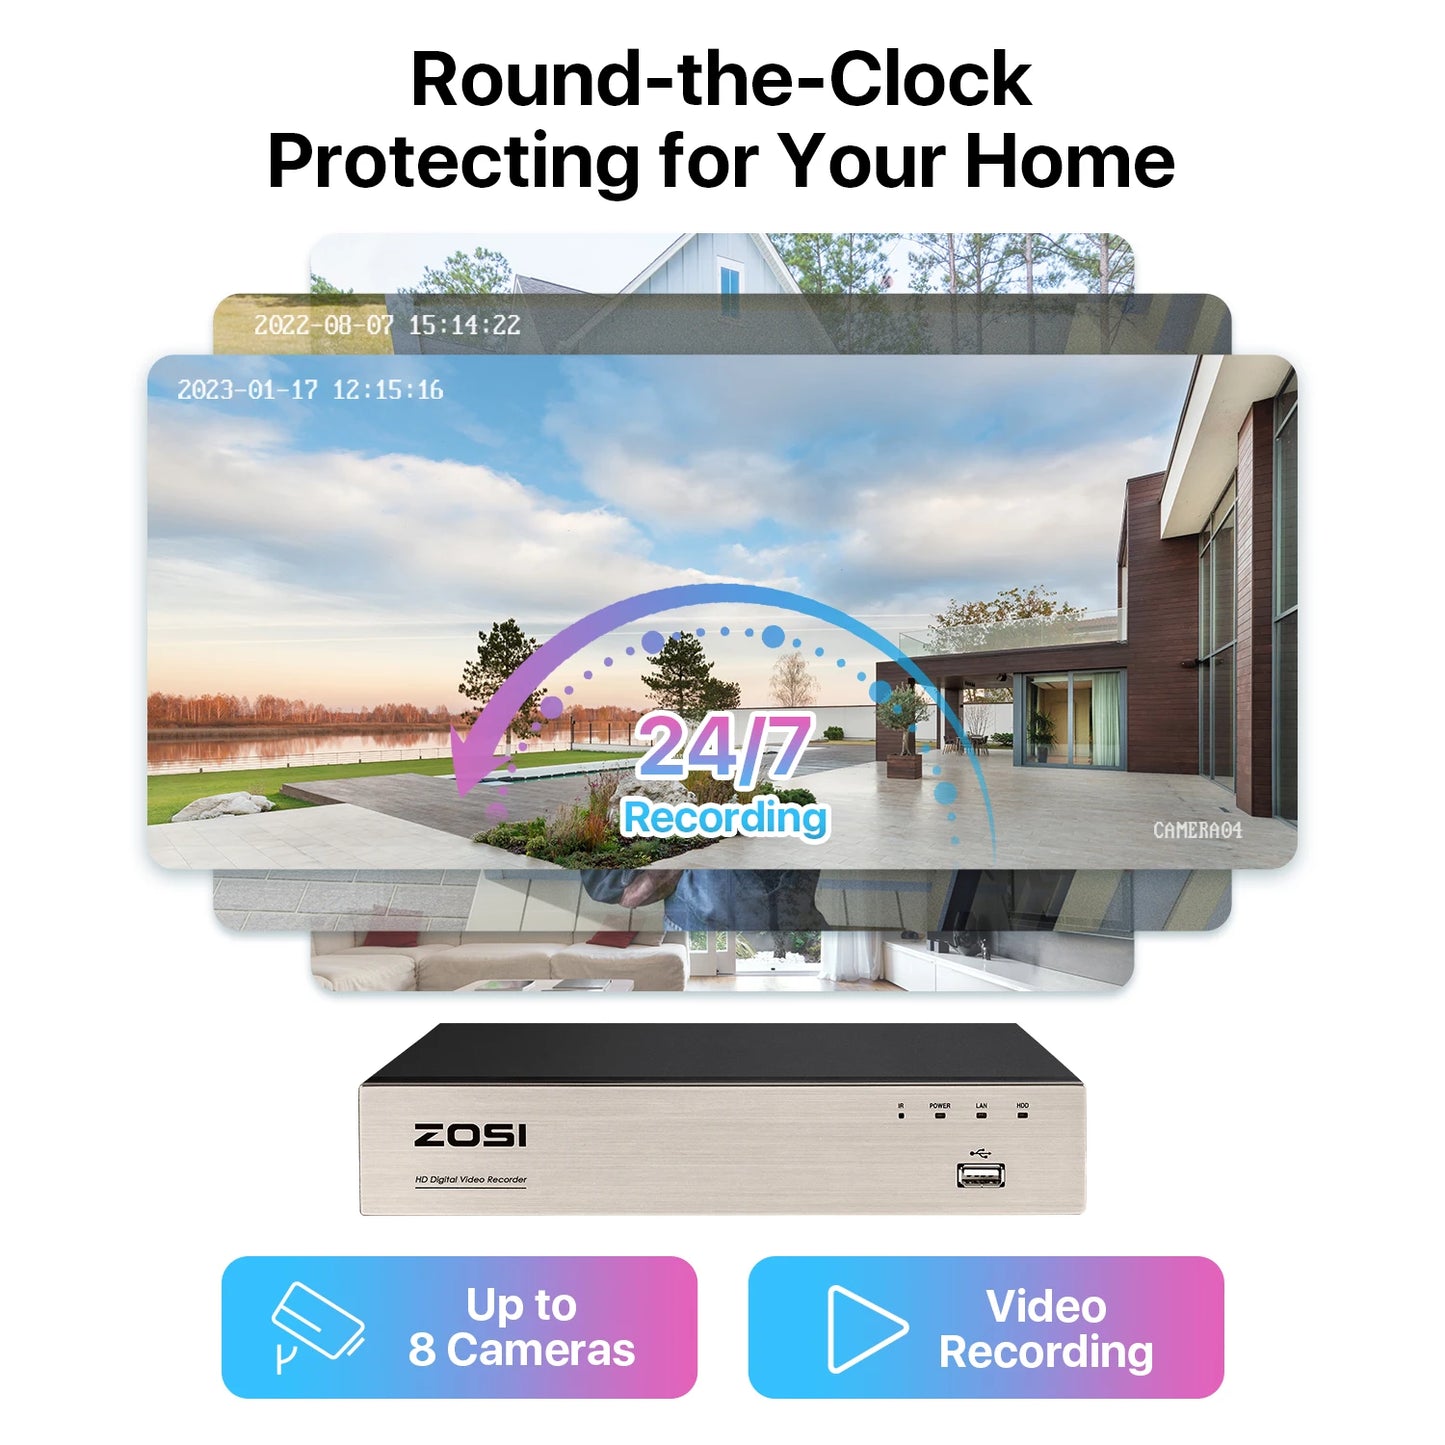 ZOSI 8CH CCTV System H.265+ 5MP Lite HD-TVI DVR kit 8 1080p 2MP Home Security Outdoor Night Vision Camera Video Surveillance Kit